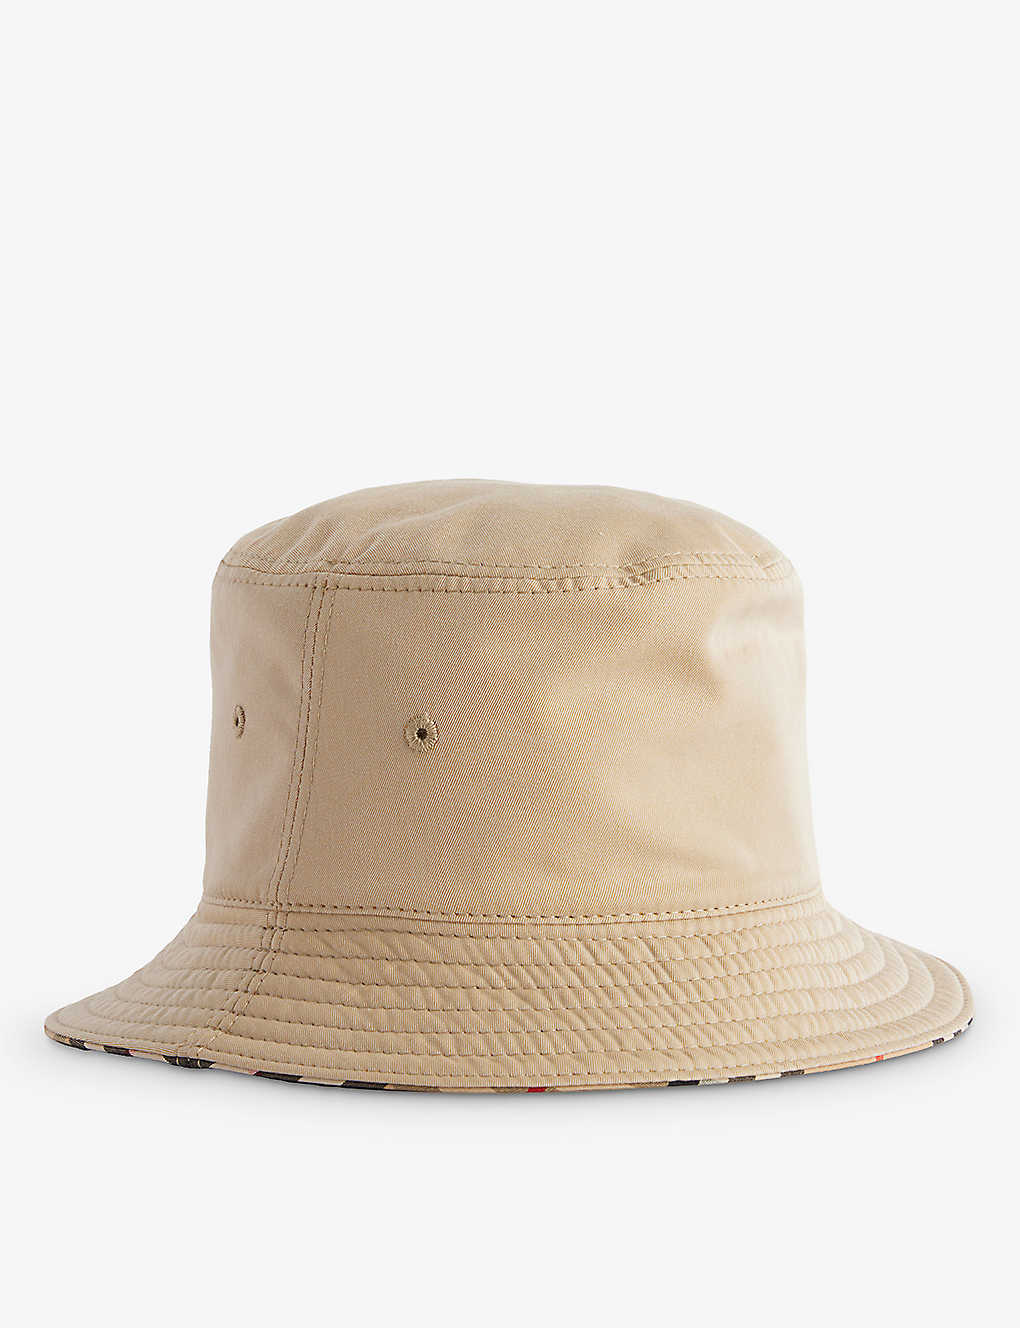 Burberry Boys Honey Kids Reversible Cotton Bucket Hat 12 Months - 3 Years